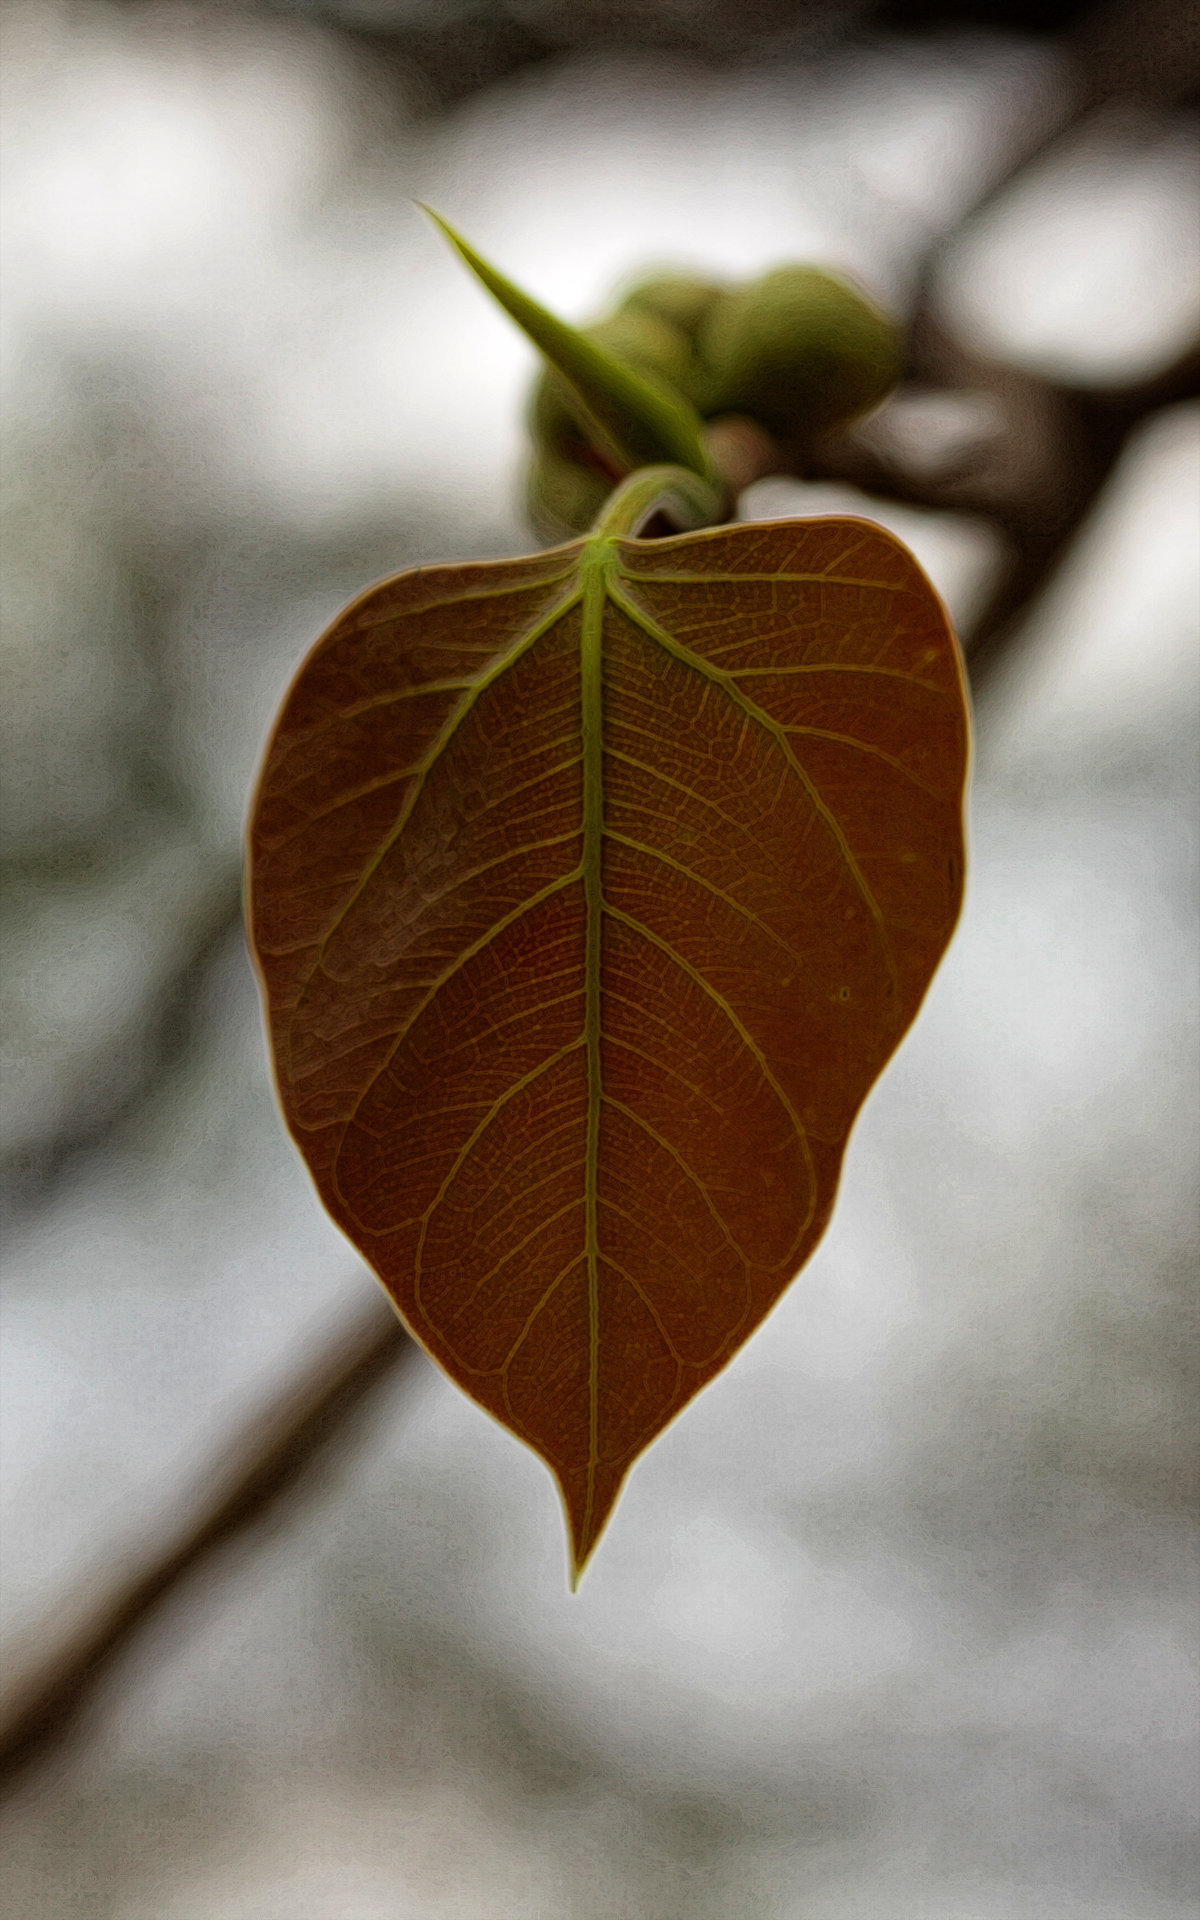 A Bo leaf